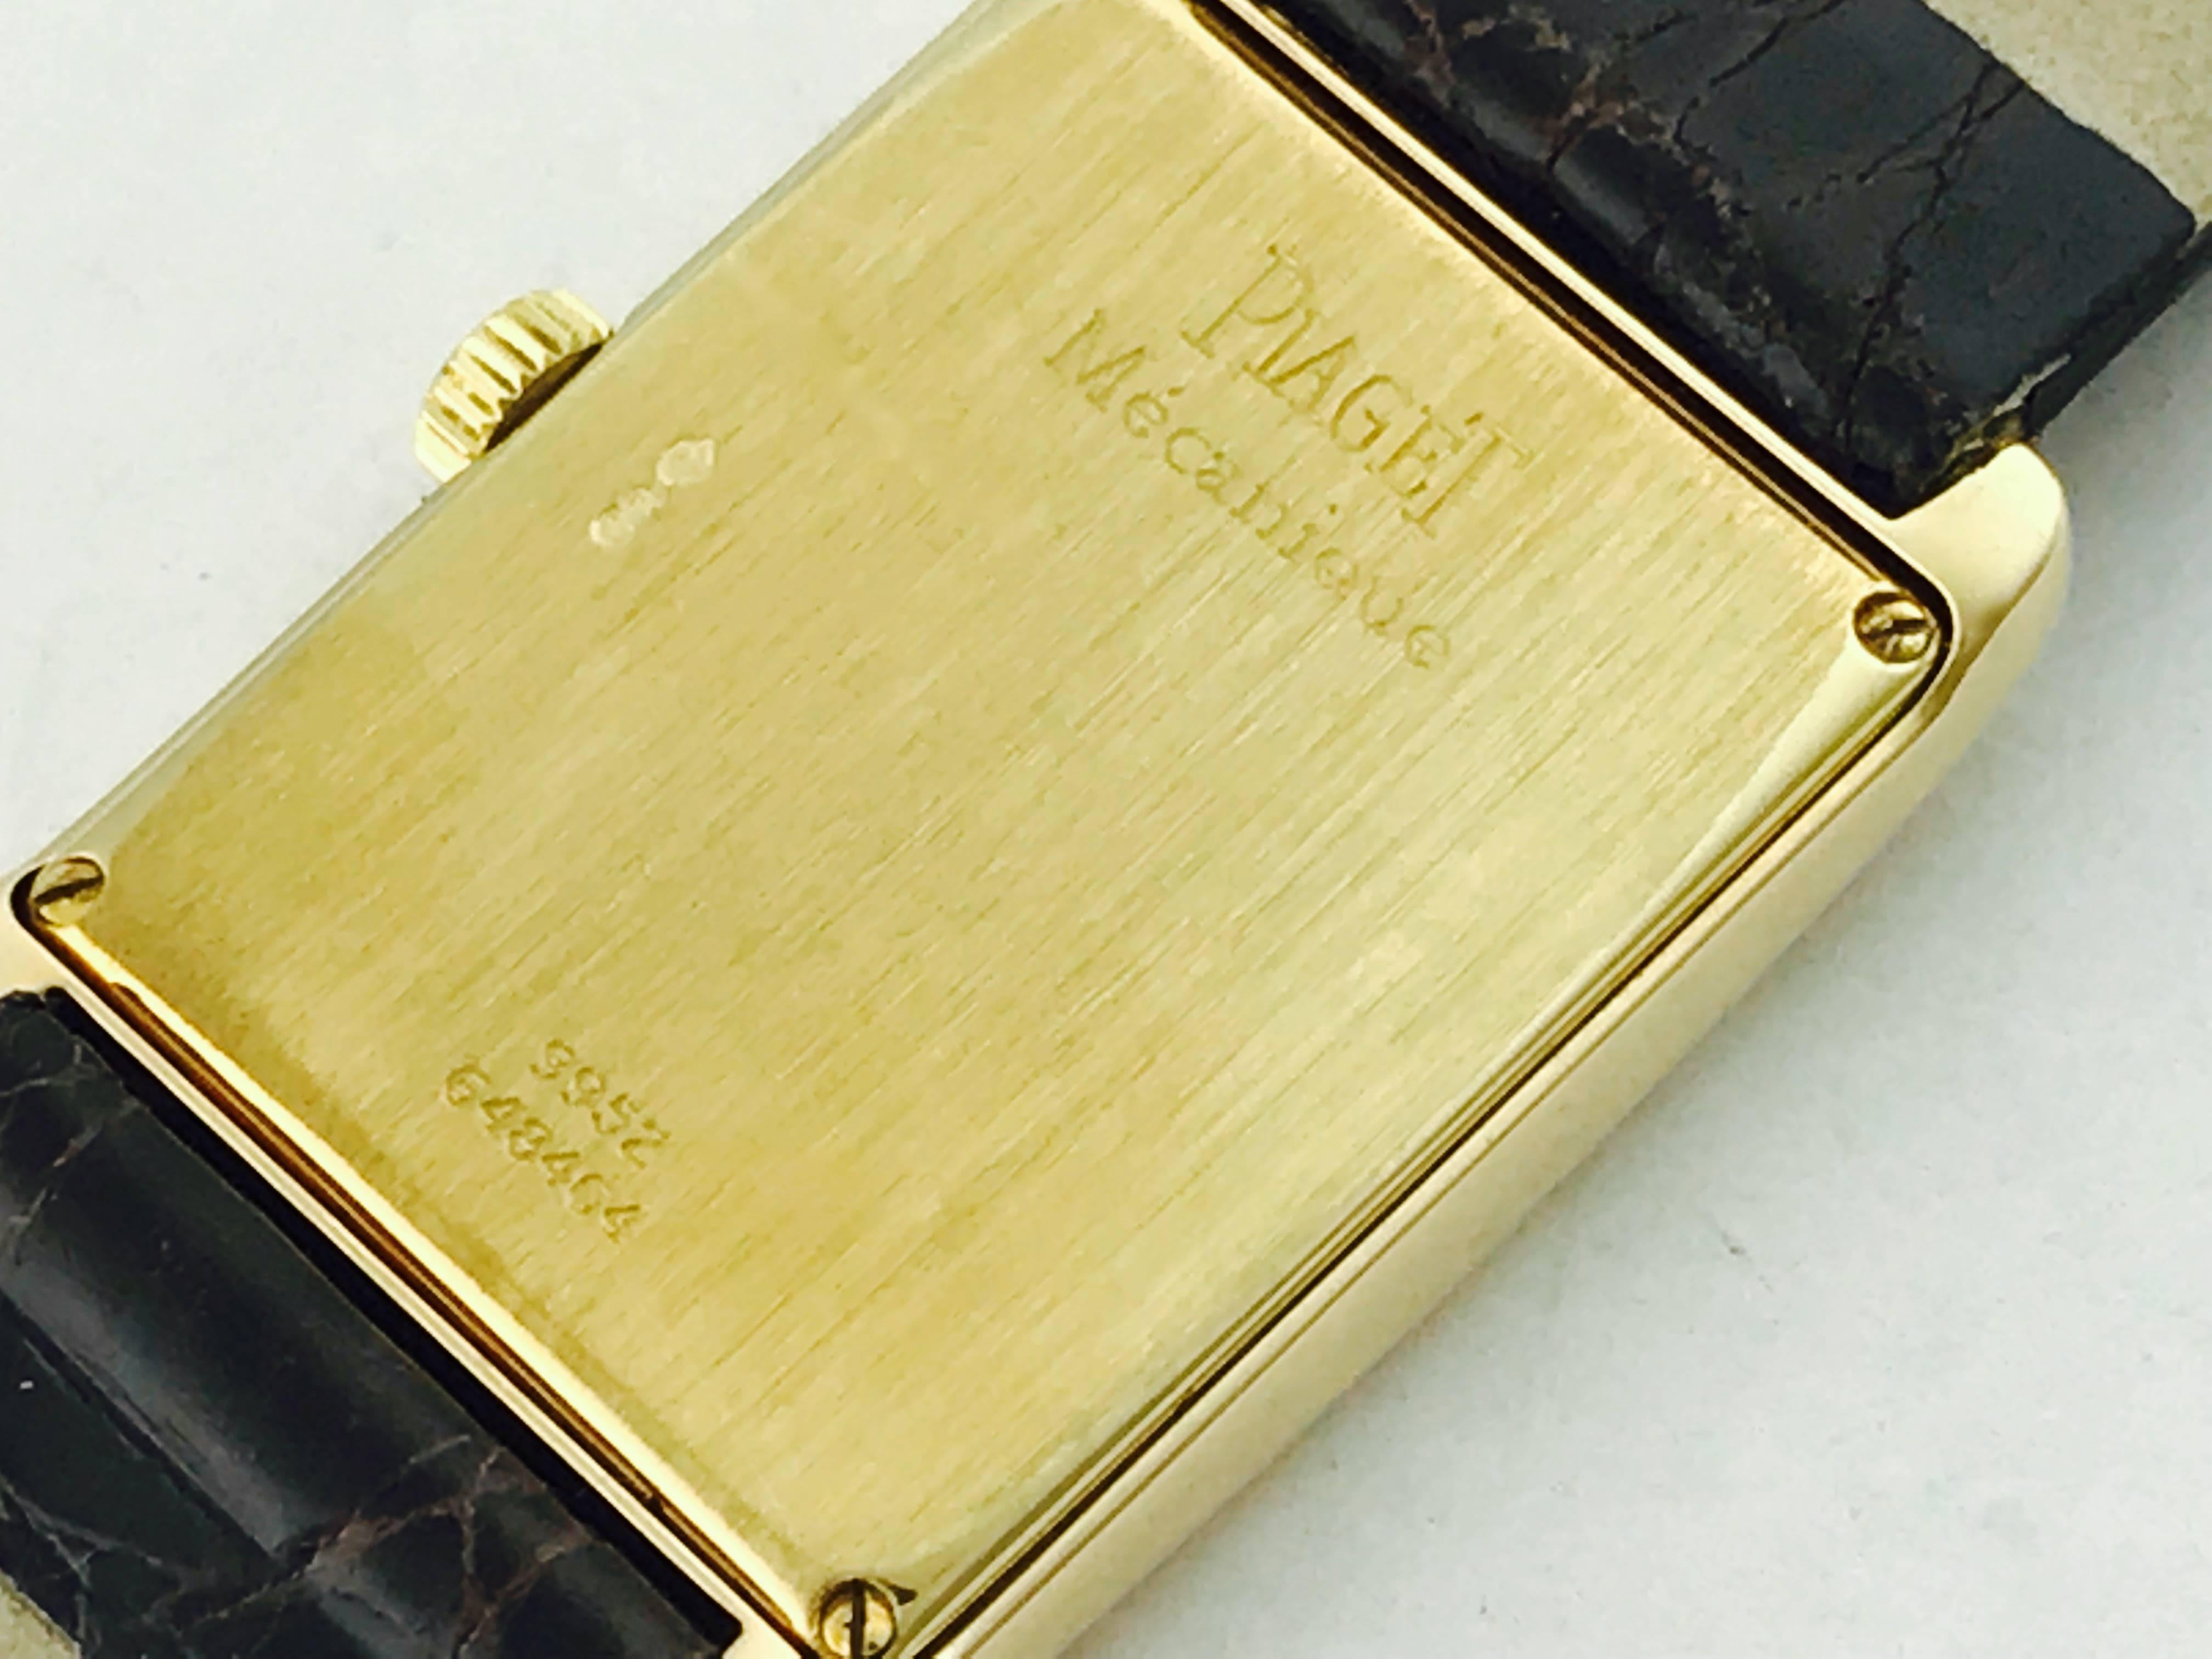 Piaget Yellow Gold Manual Wind Wristwatch Ref 9952 1